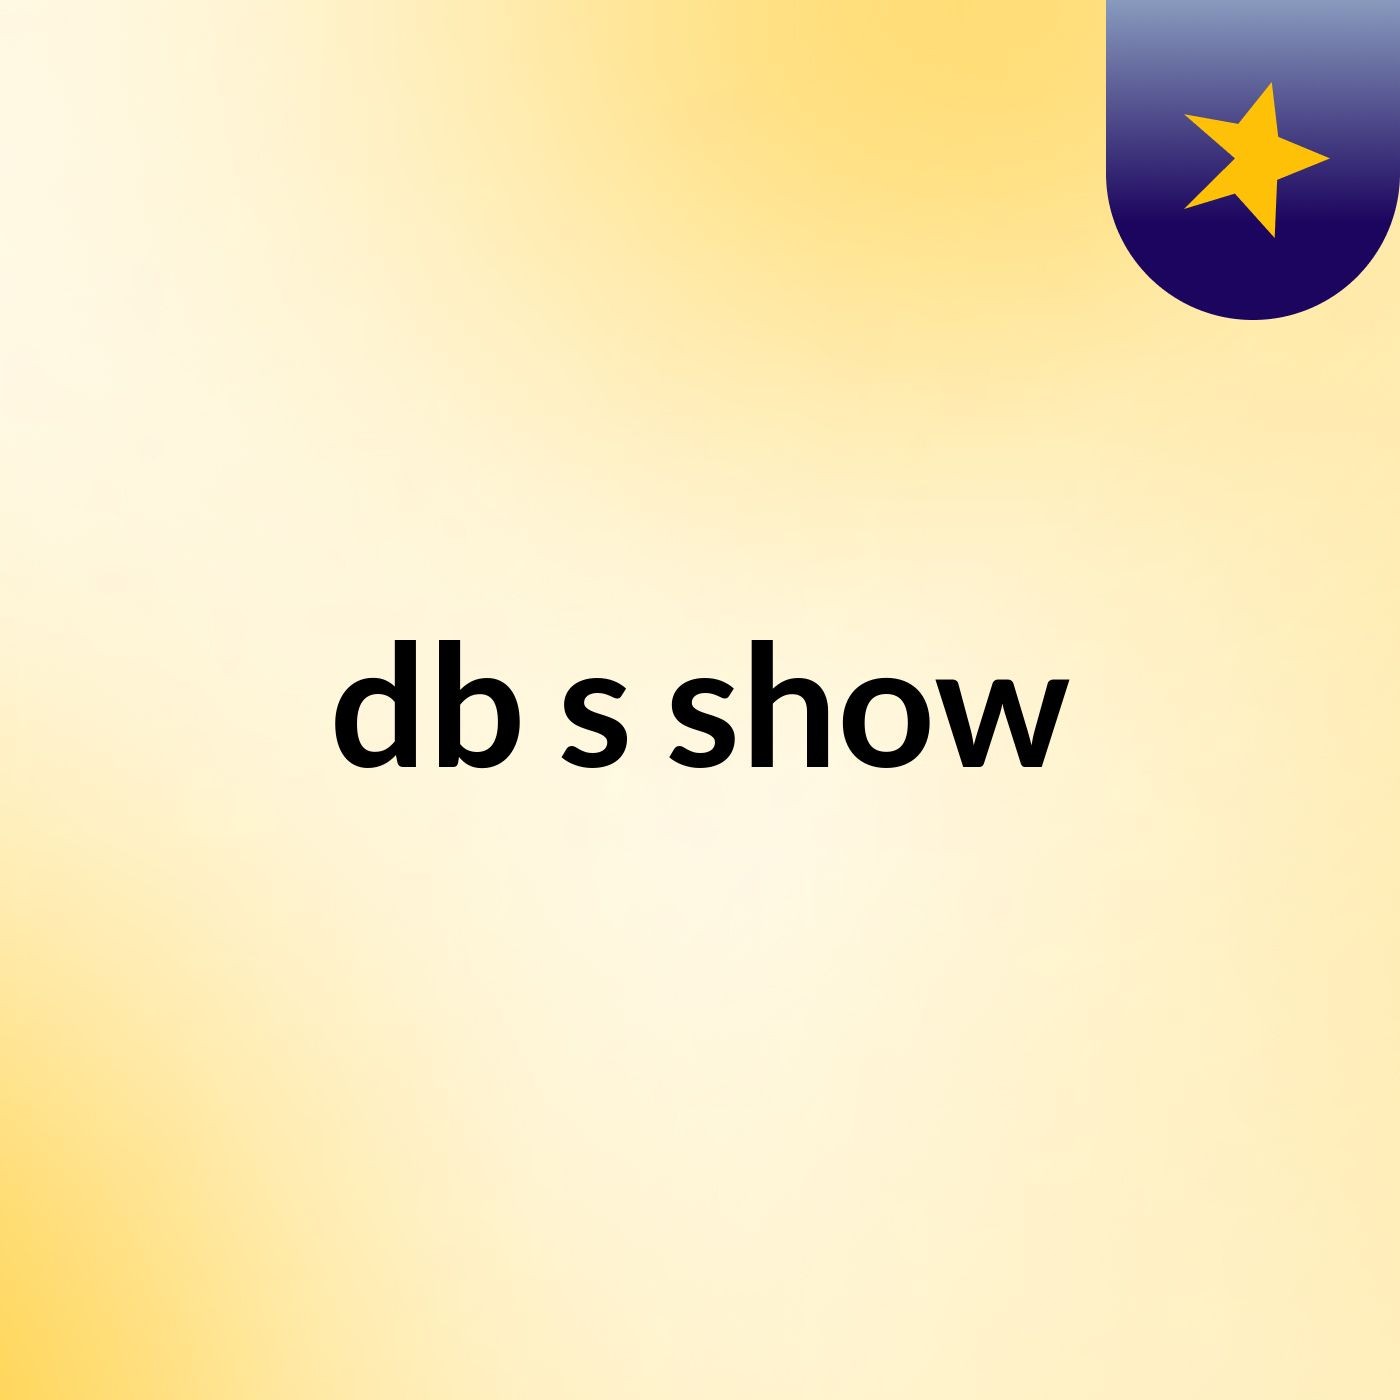 db's show